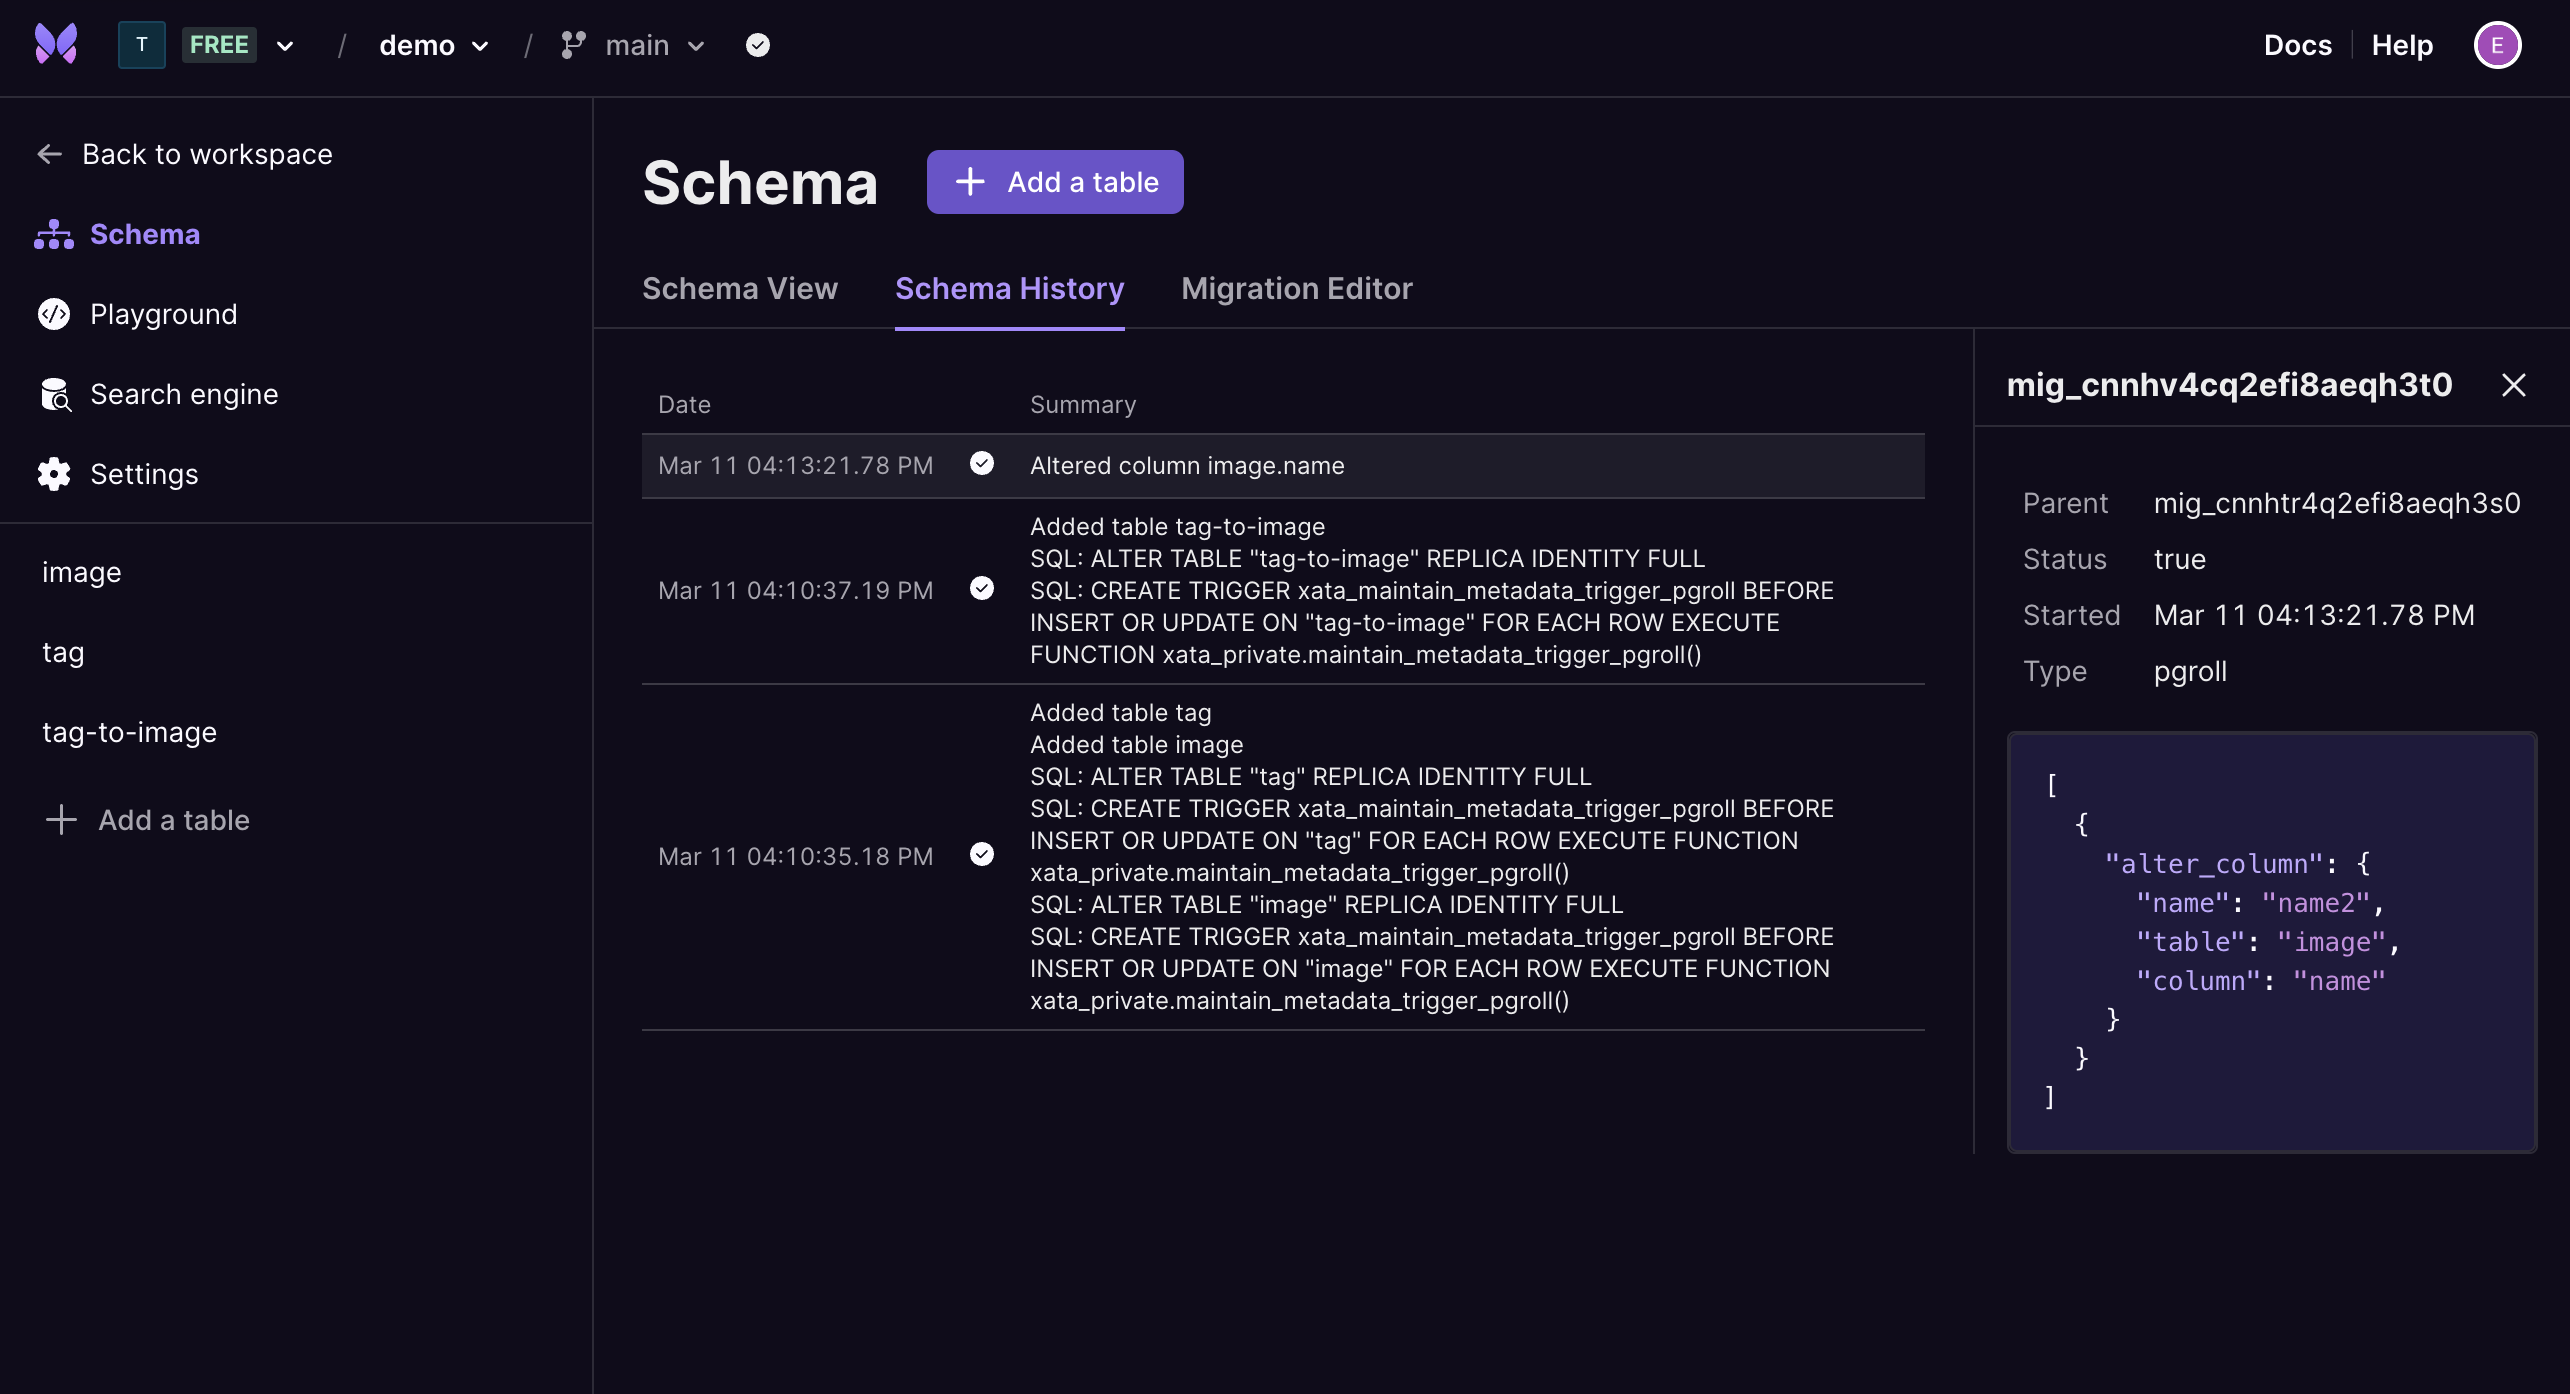 New Schema History tab